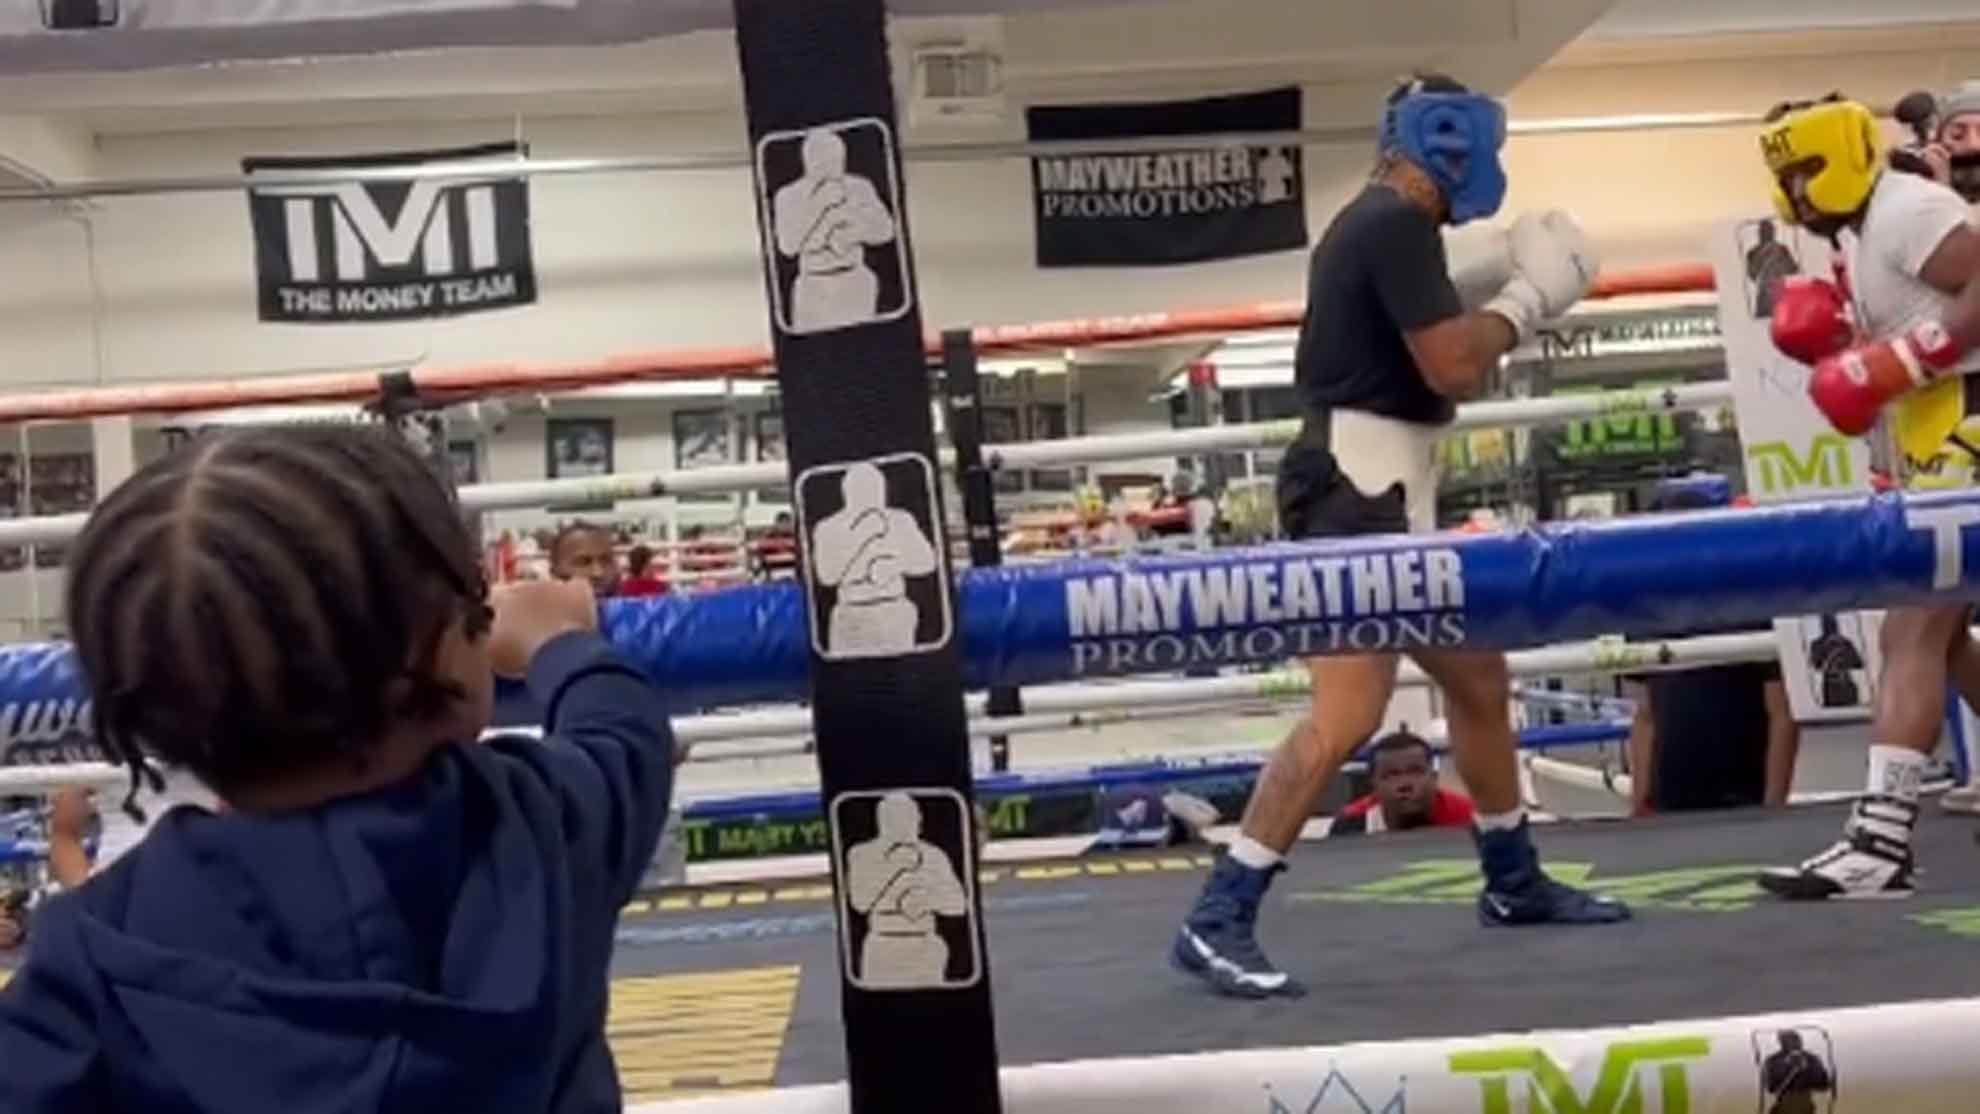 Dana White mocks Floyd Mayweather vs. Logan Paul boxing exhibition